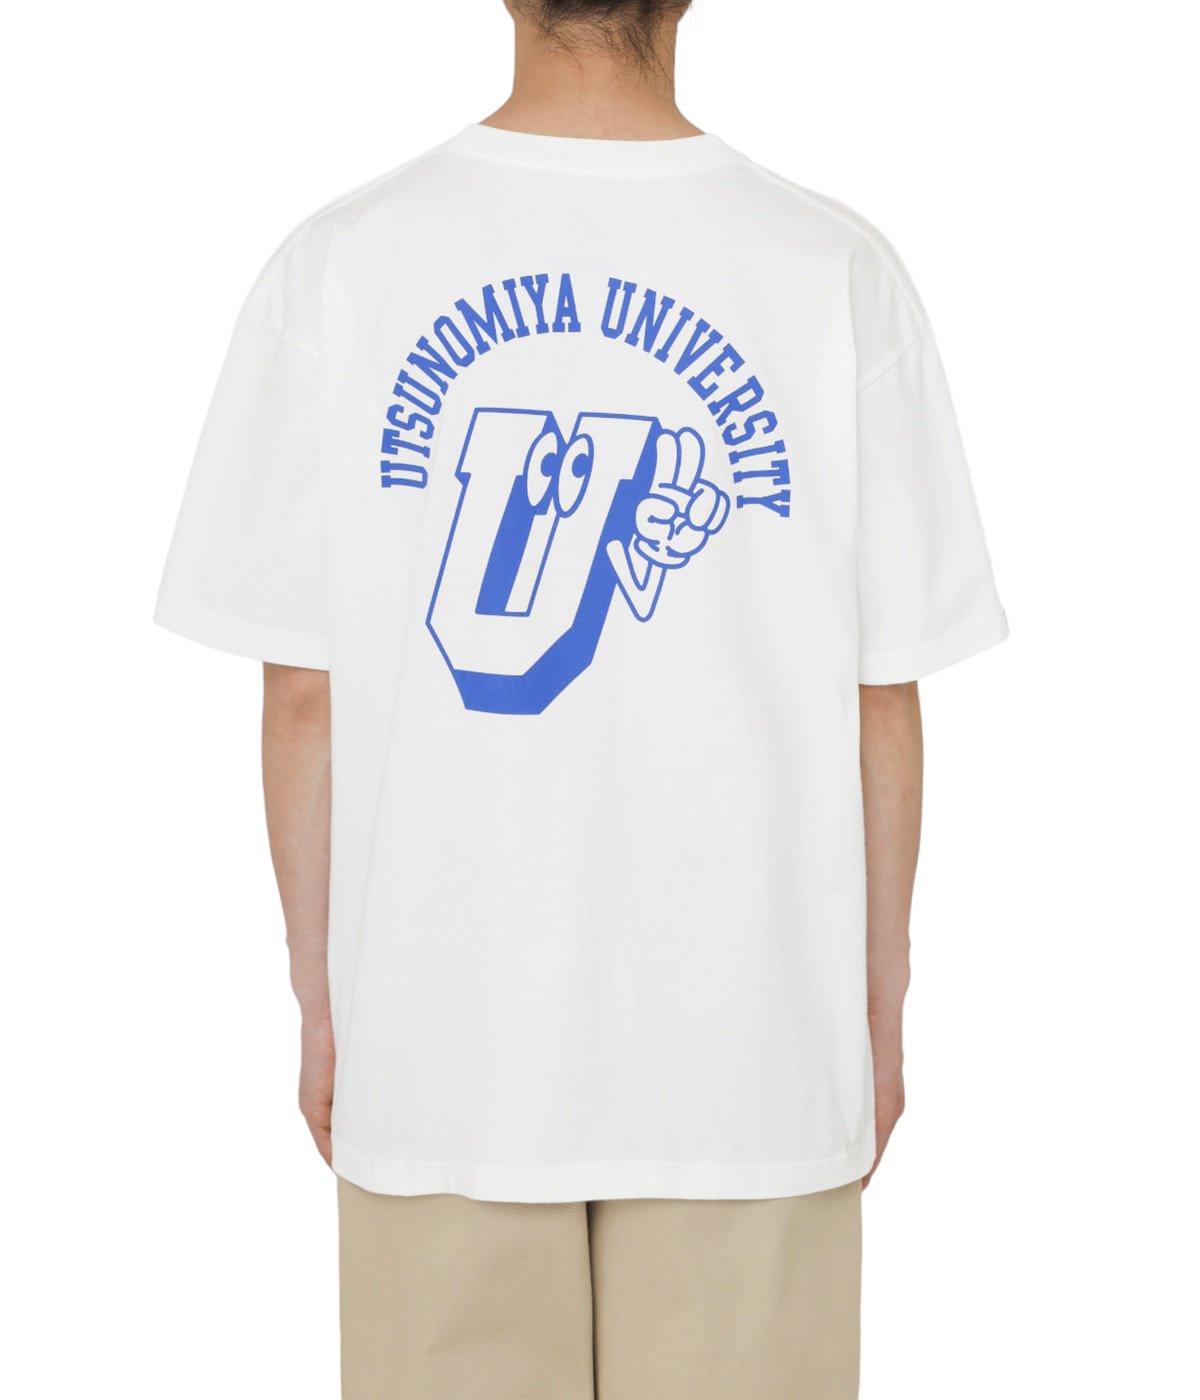 ONLY ARK】宇都宮大学×ARKnets カレッジTシャツ | WP(ダブリューピー